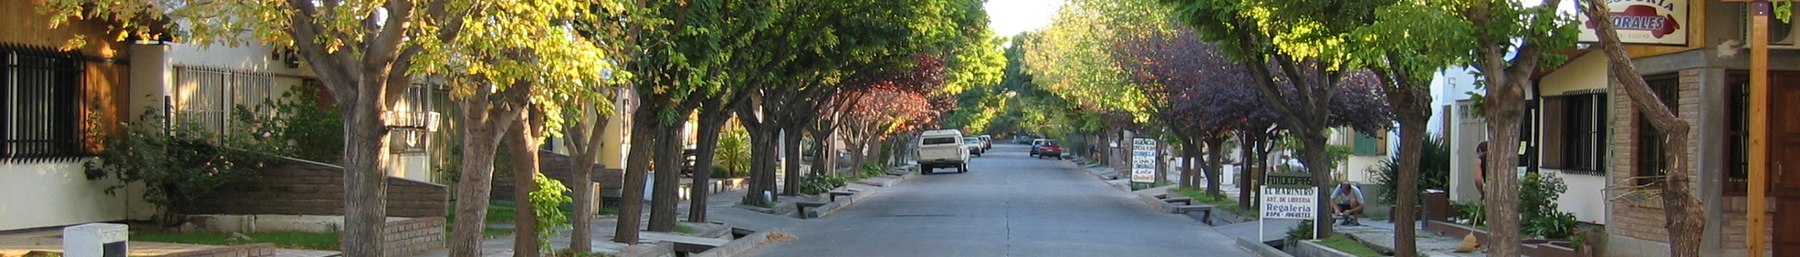 San Rafael (AR) banner typical street.jpg